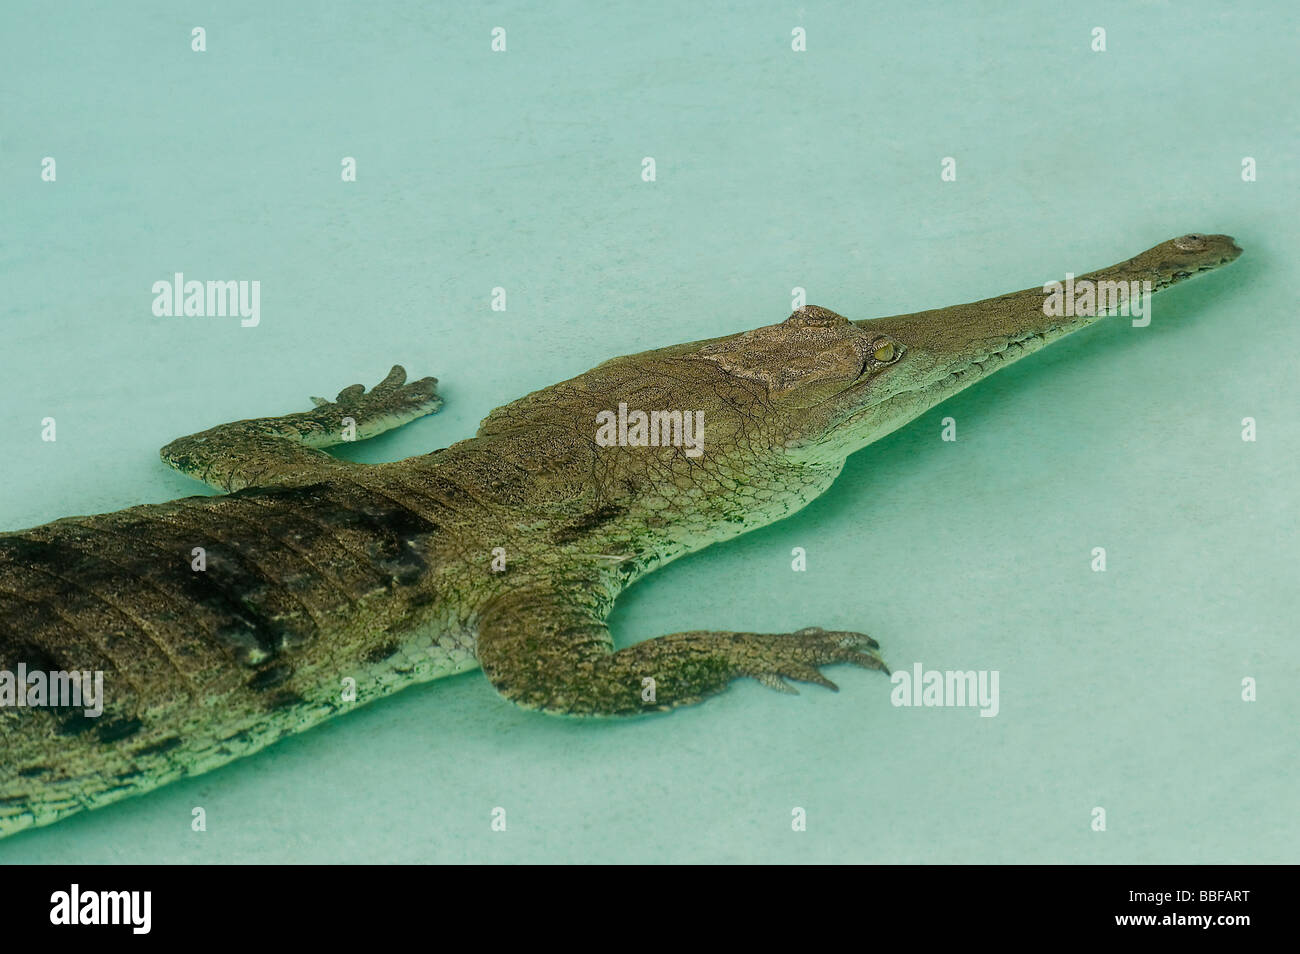 Freshwater crocodile Crocodylus johnstoni or freshie has a slender snout Australia Stock Photo